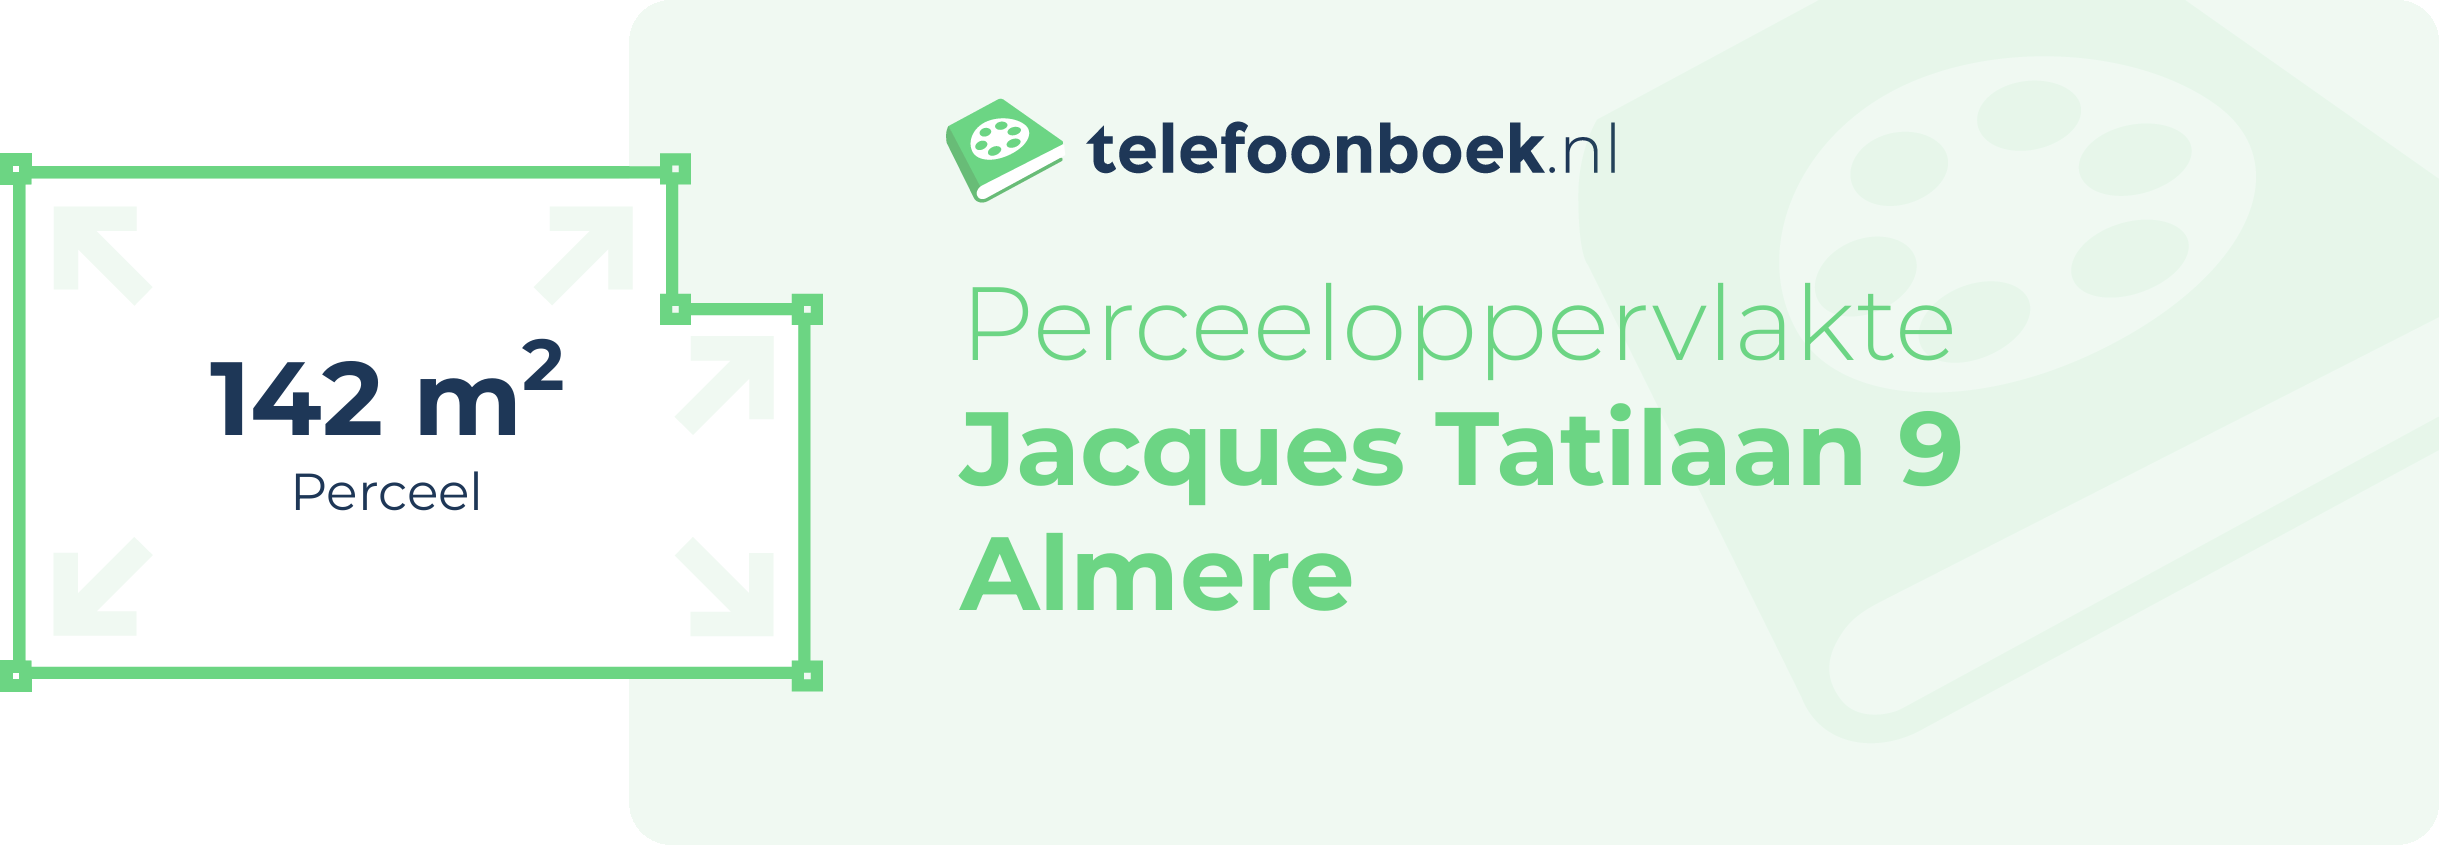 Perceeloppervlakte Jacques Tatilaan 9 Almere